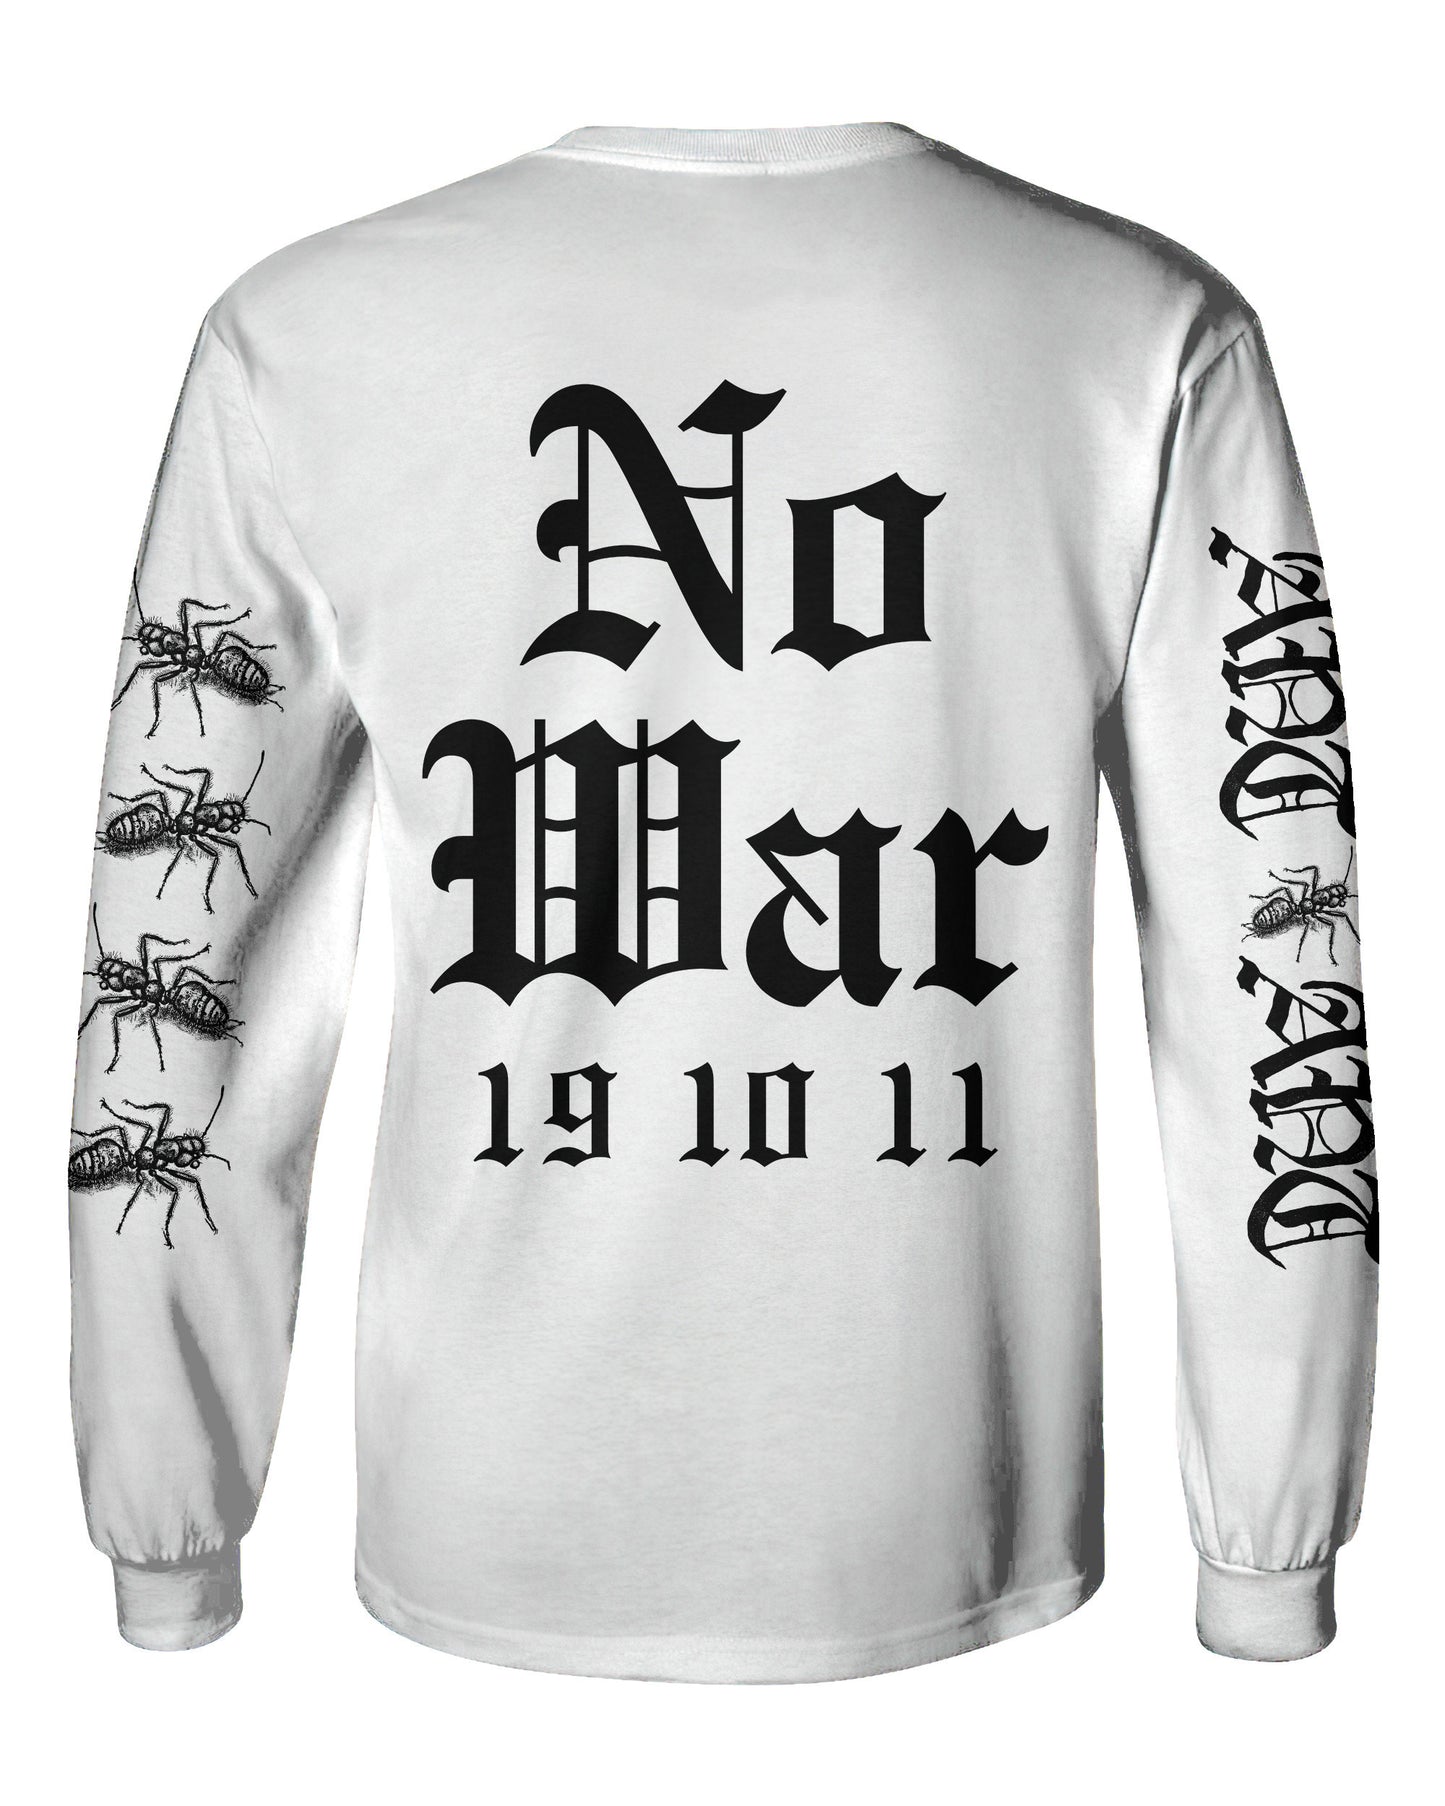 "NO WAR" WHITE LONG SLEEVE T-SHIRT